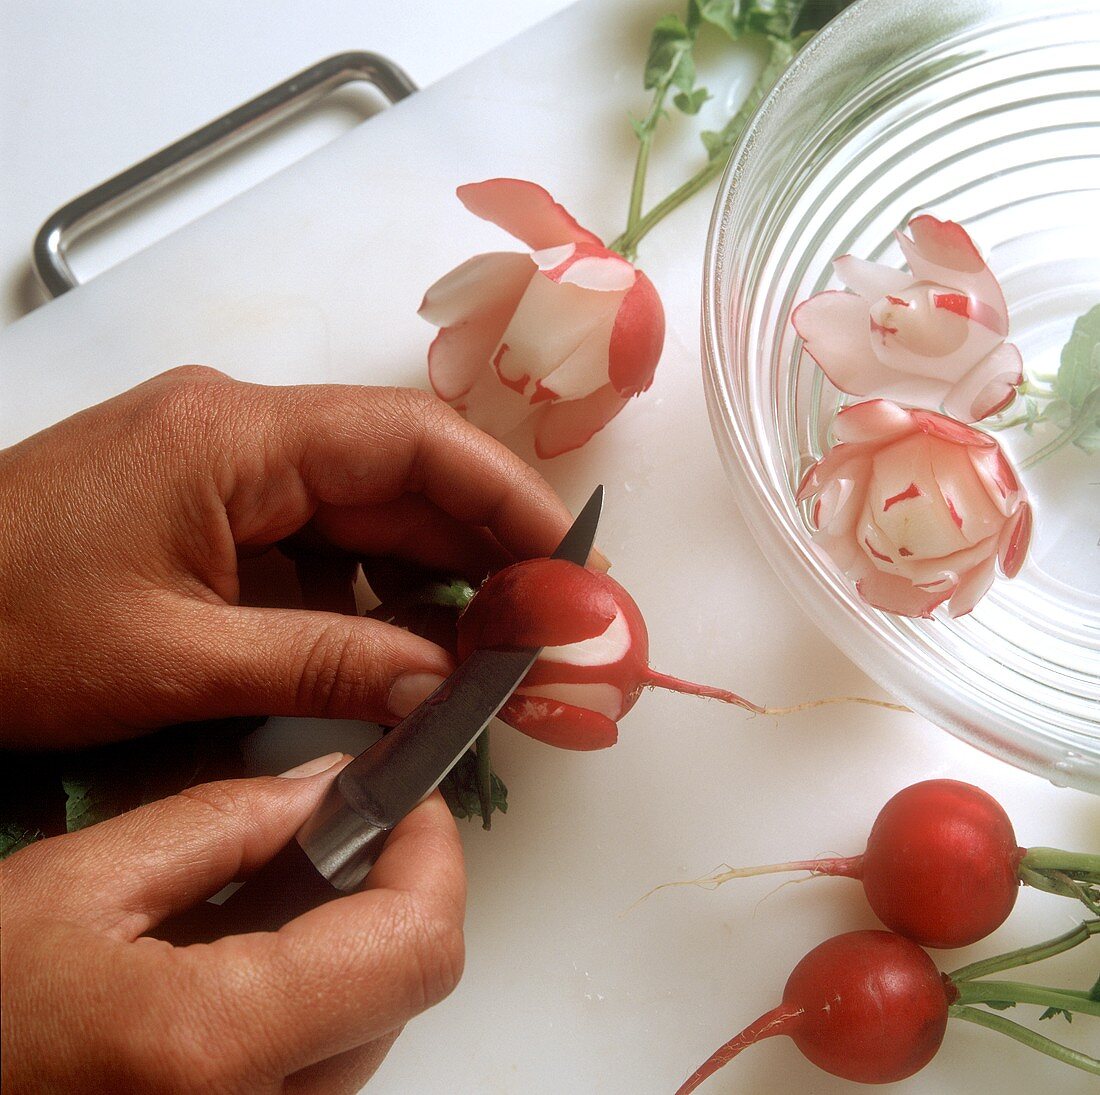 Making radish flowers